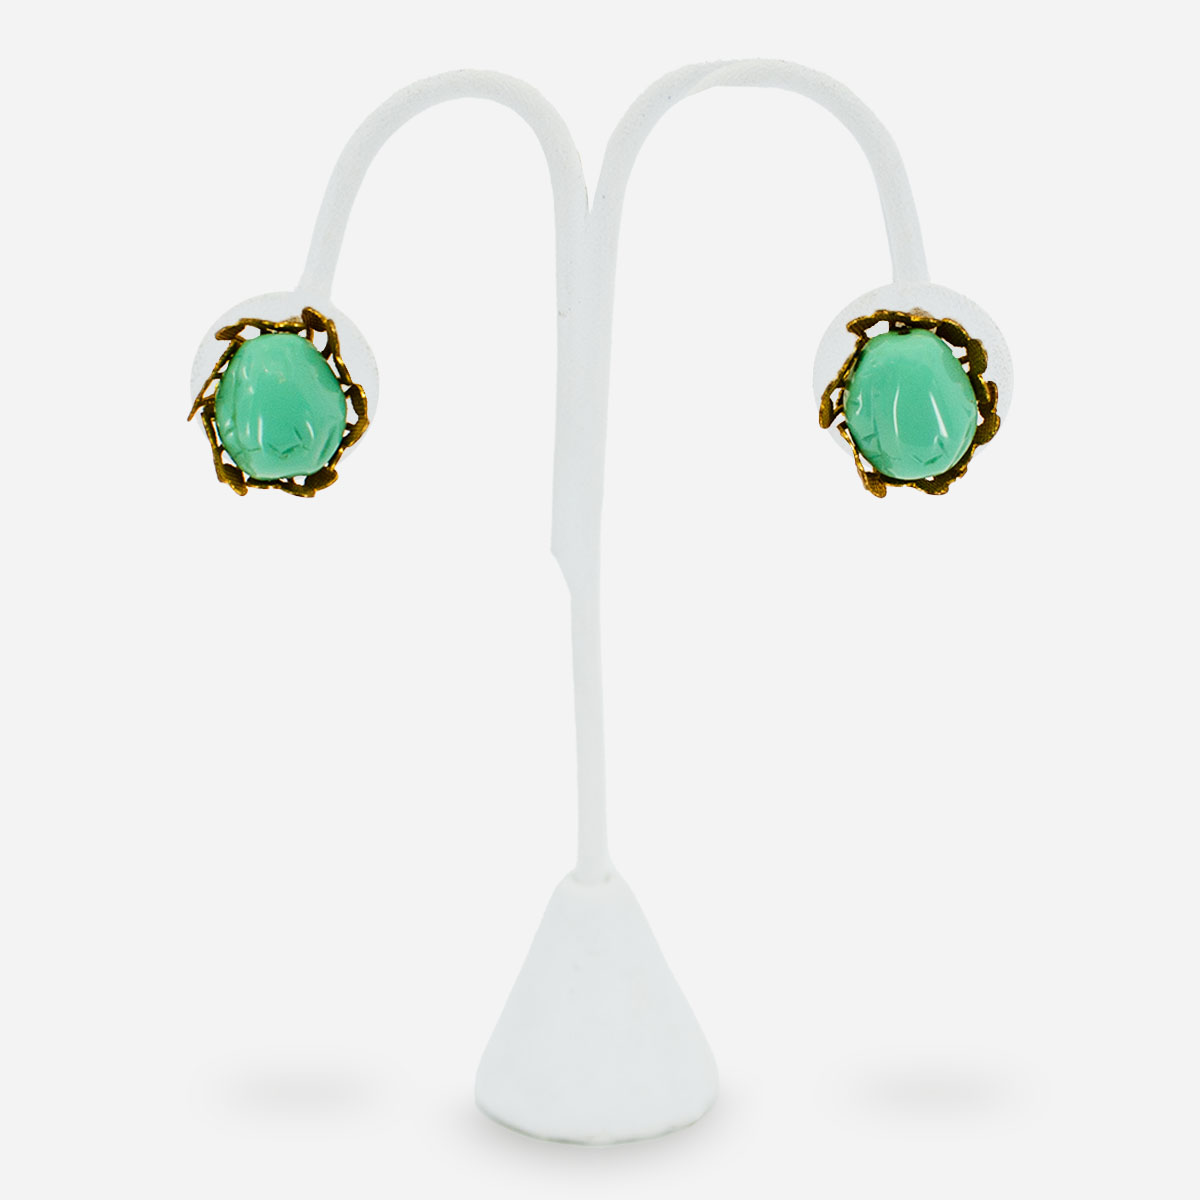 VIntage 1950s glass earrings